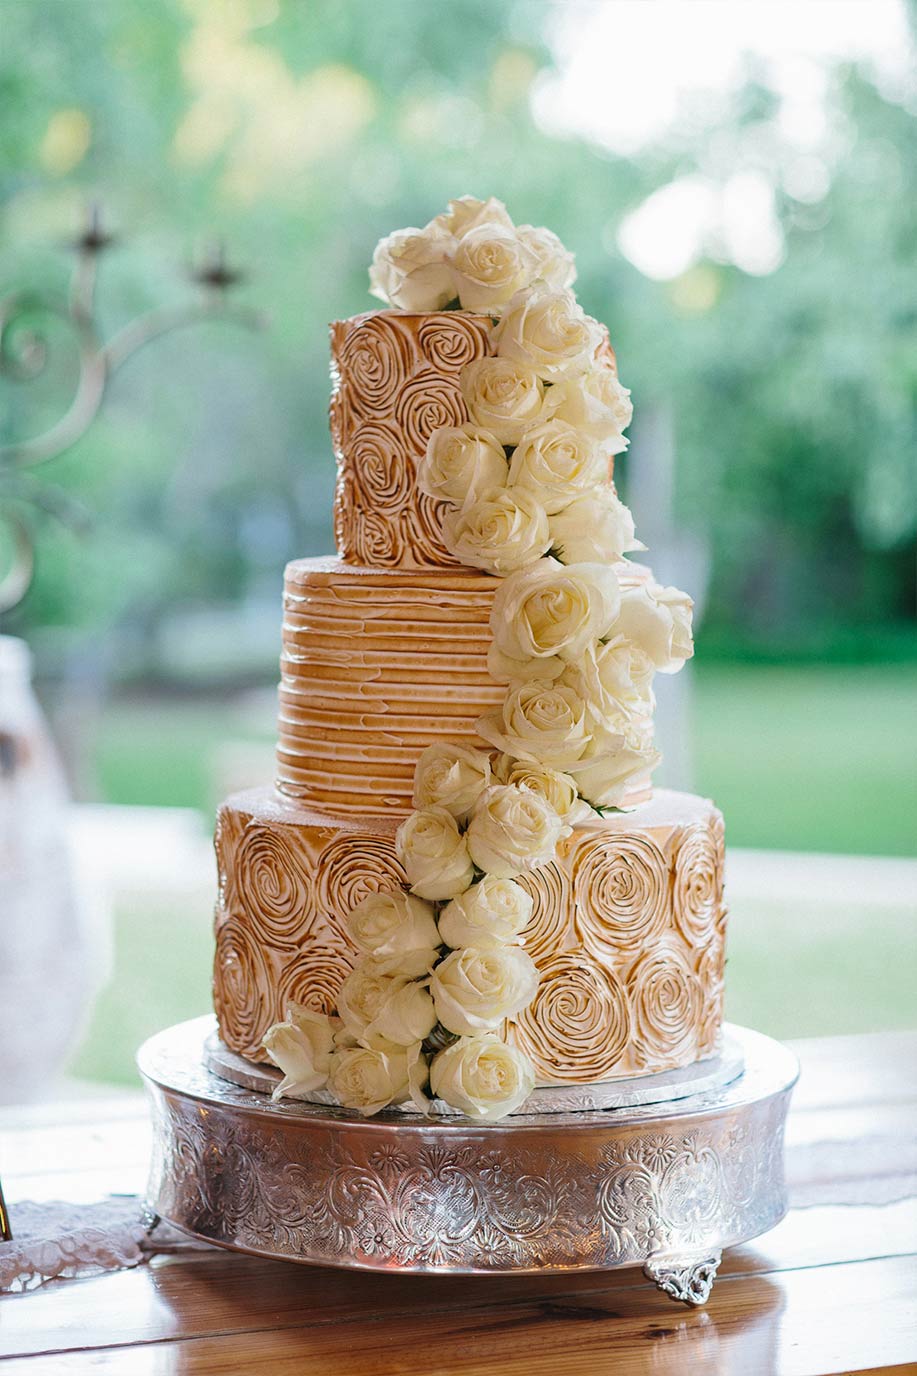 La Dunni wedding cake with white flowers